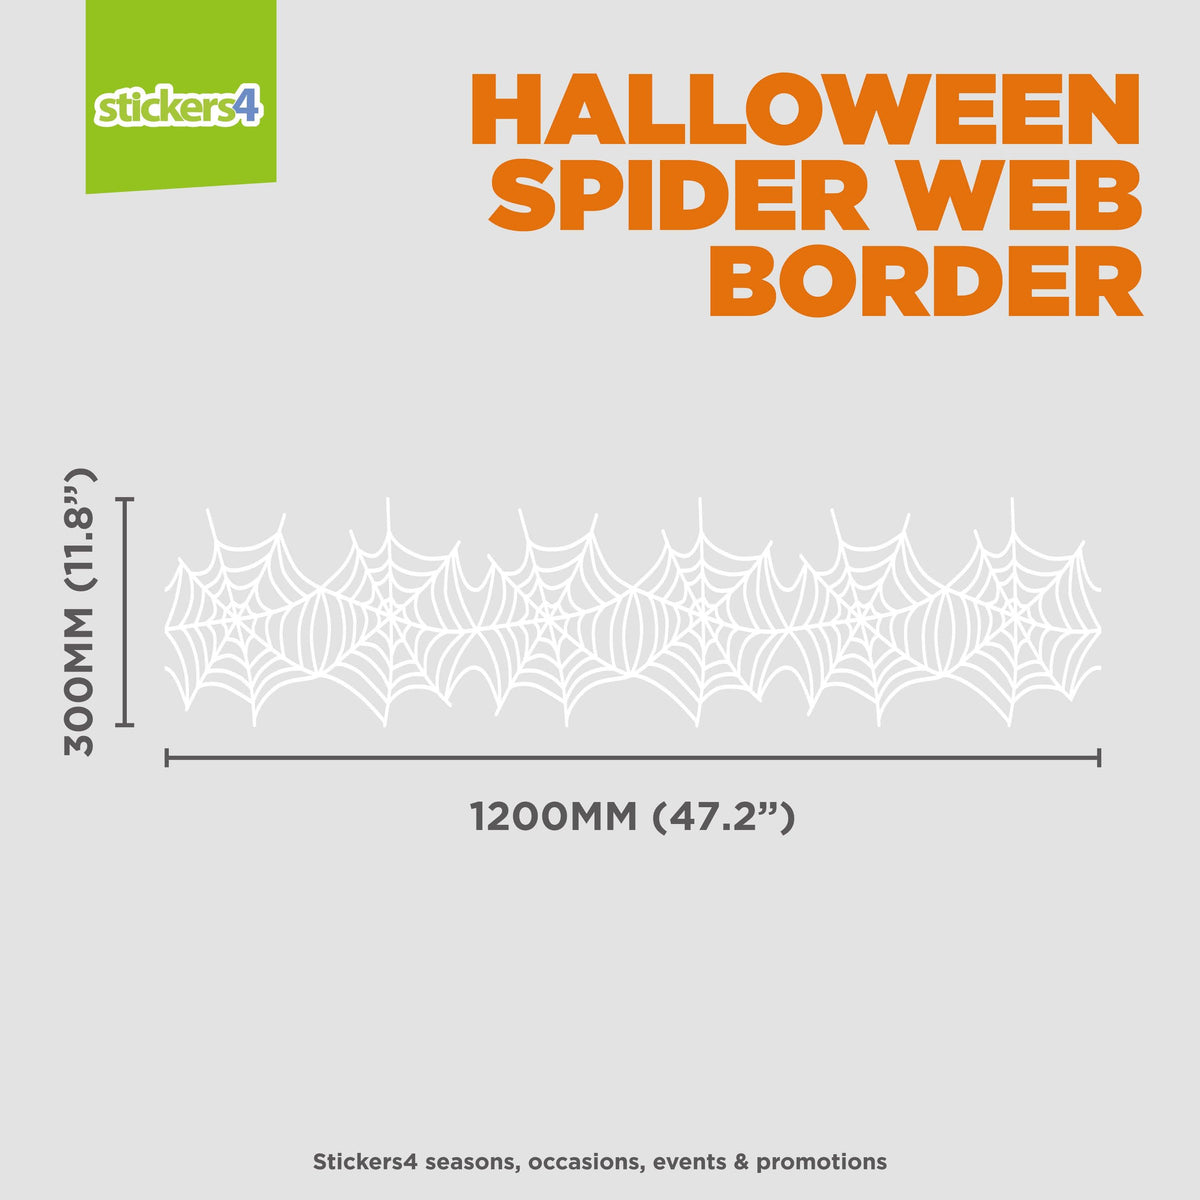 Spider Web Border Window Cling Sticker Halloween Display